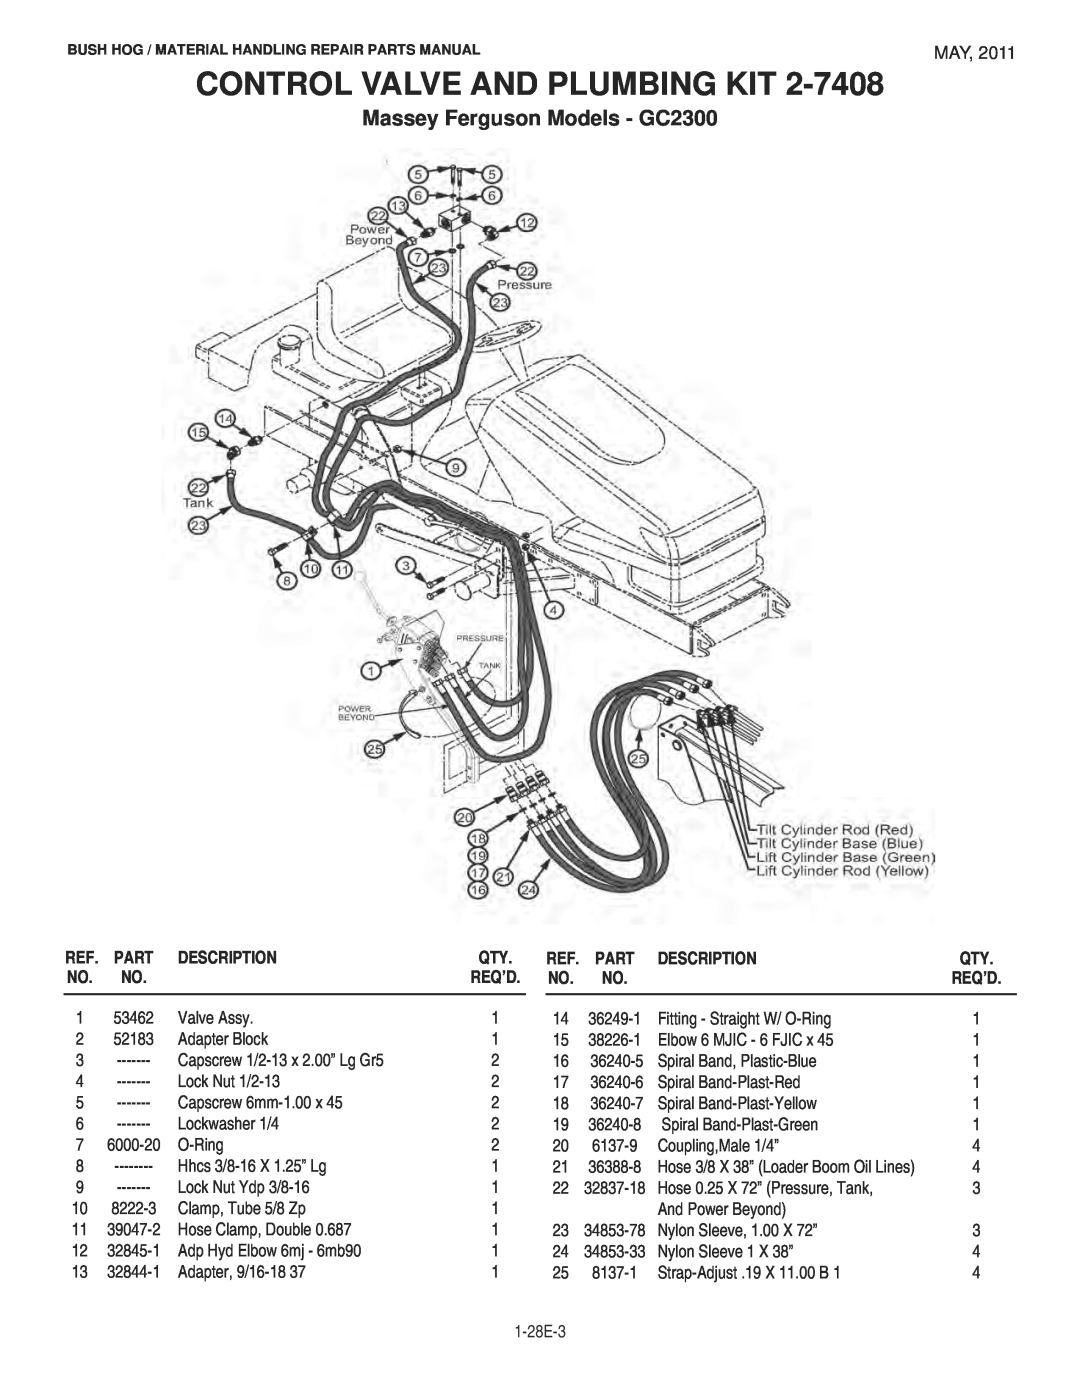 Bush Hog 1747 manual Massey Ferguson Models - GC2300, Control Valve And Plumbing Kit, Description 